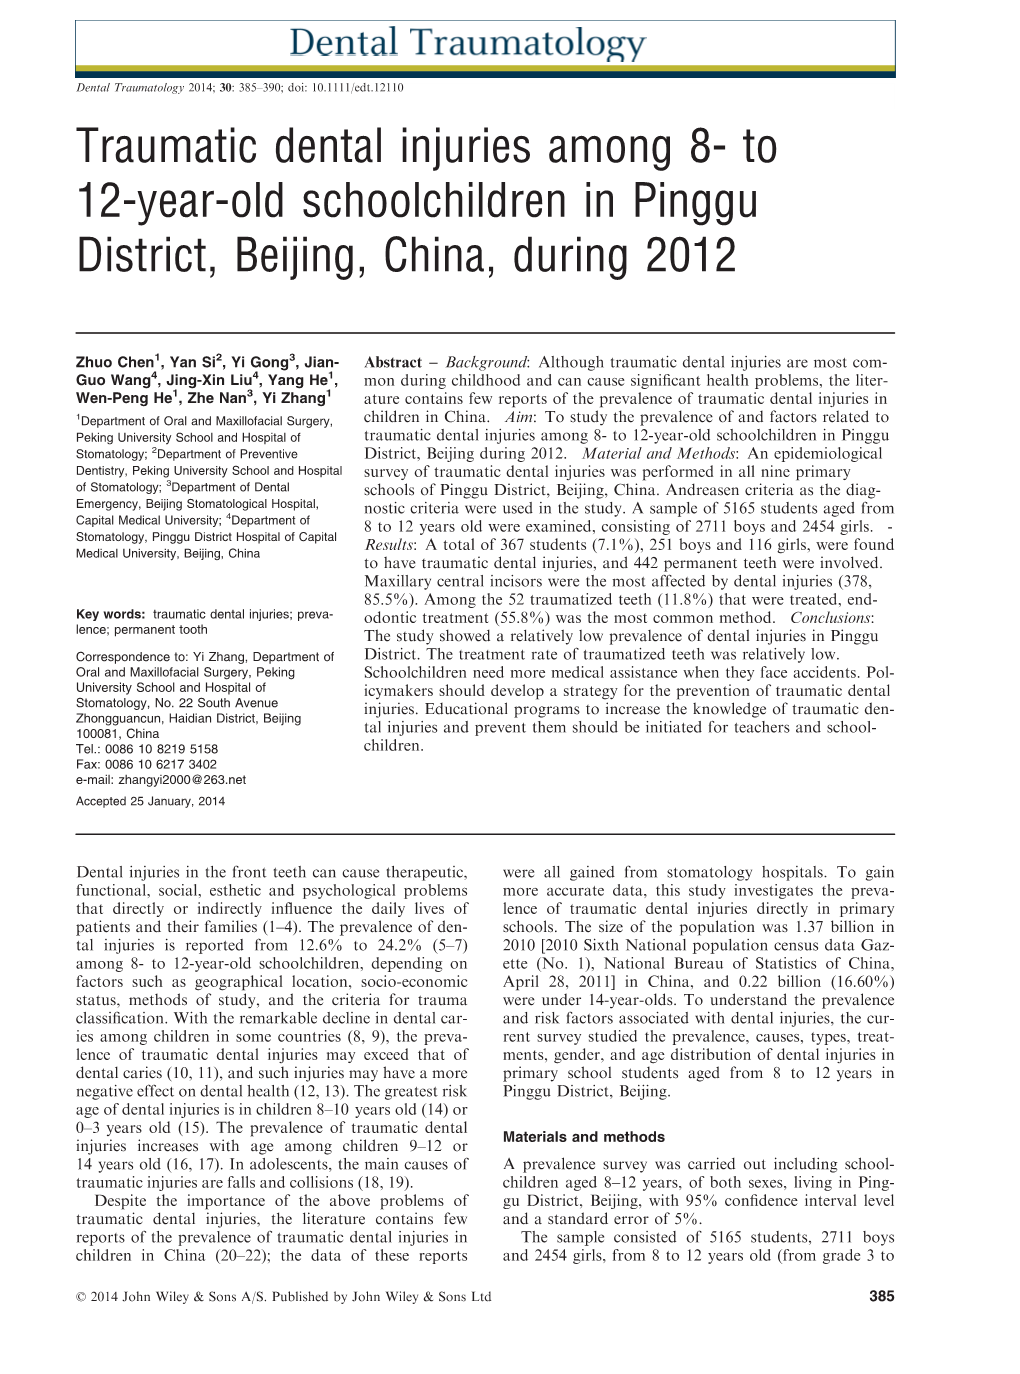 Traumatic Dental Injuries Among 8 to 12Yearold Schoolchildren in Pinggu